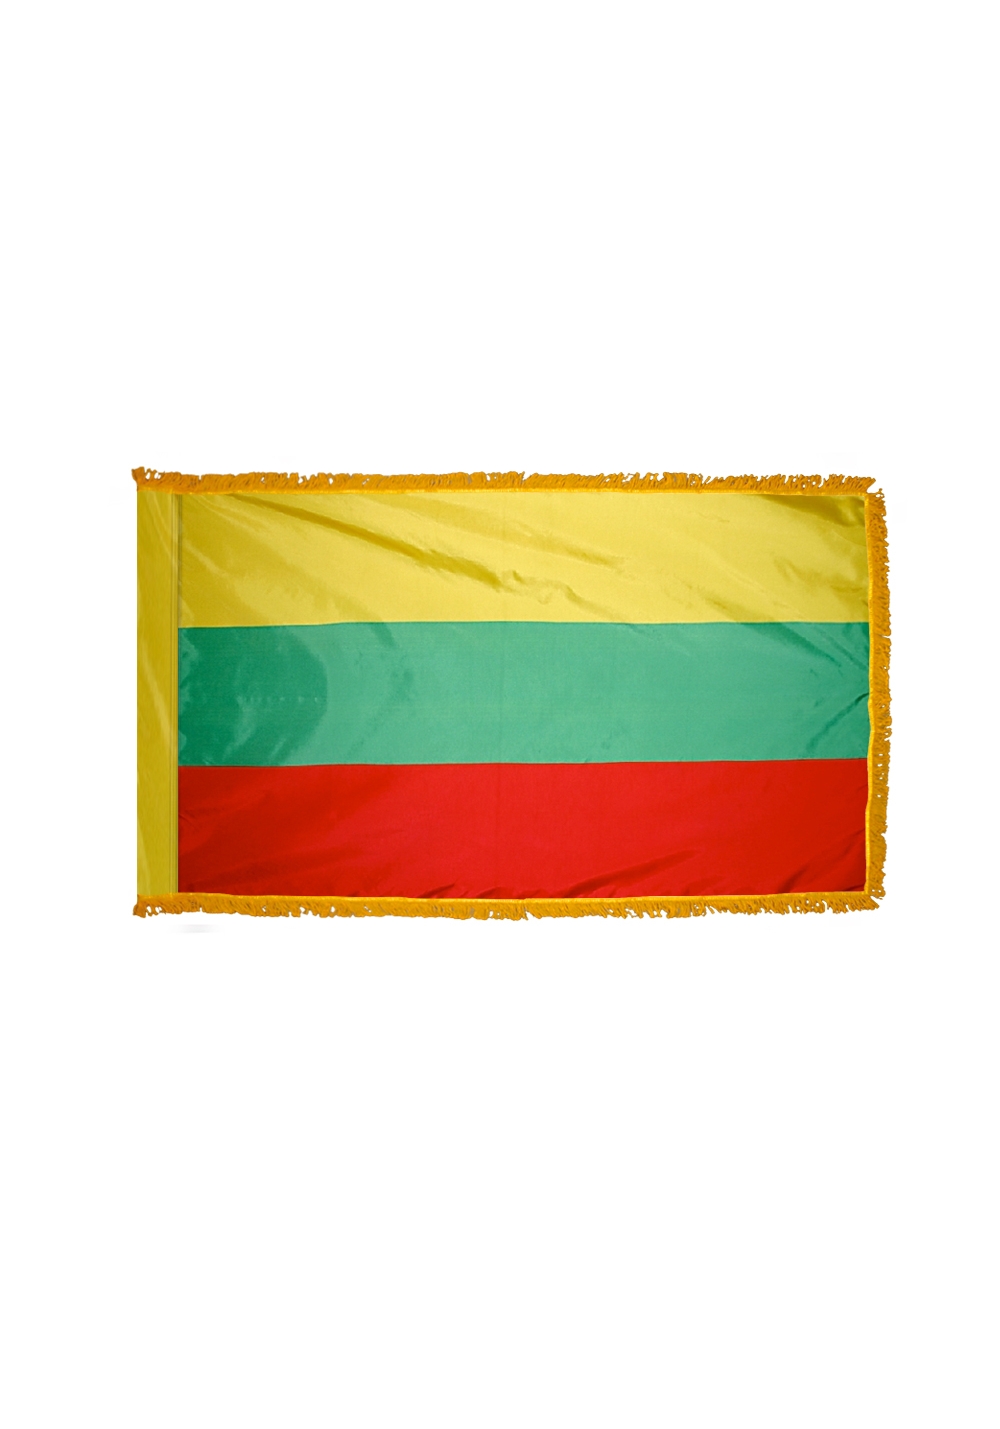 Details about   Lithuania Lietuvos Respublika 4"x6" Flag on a Pole NEW 